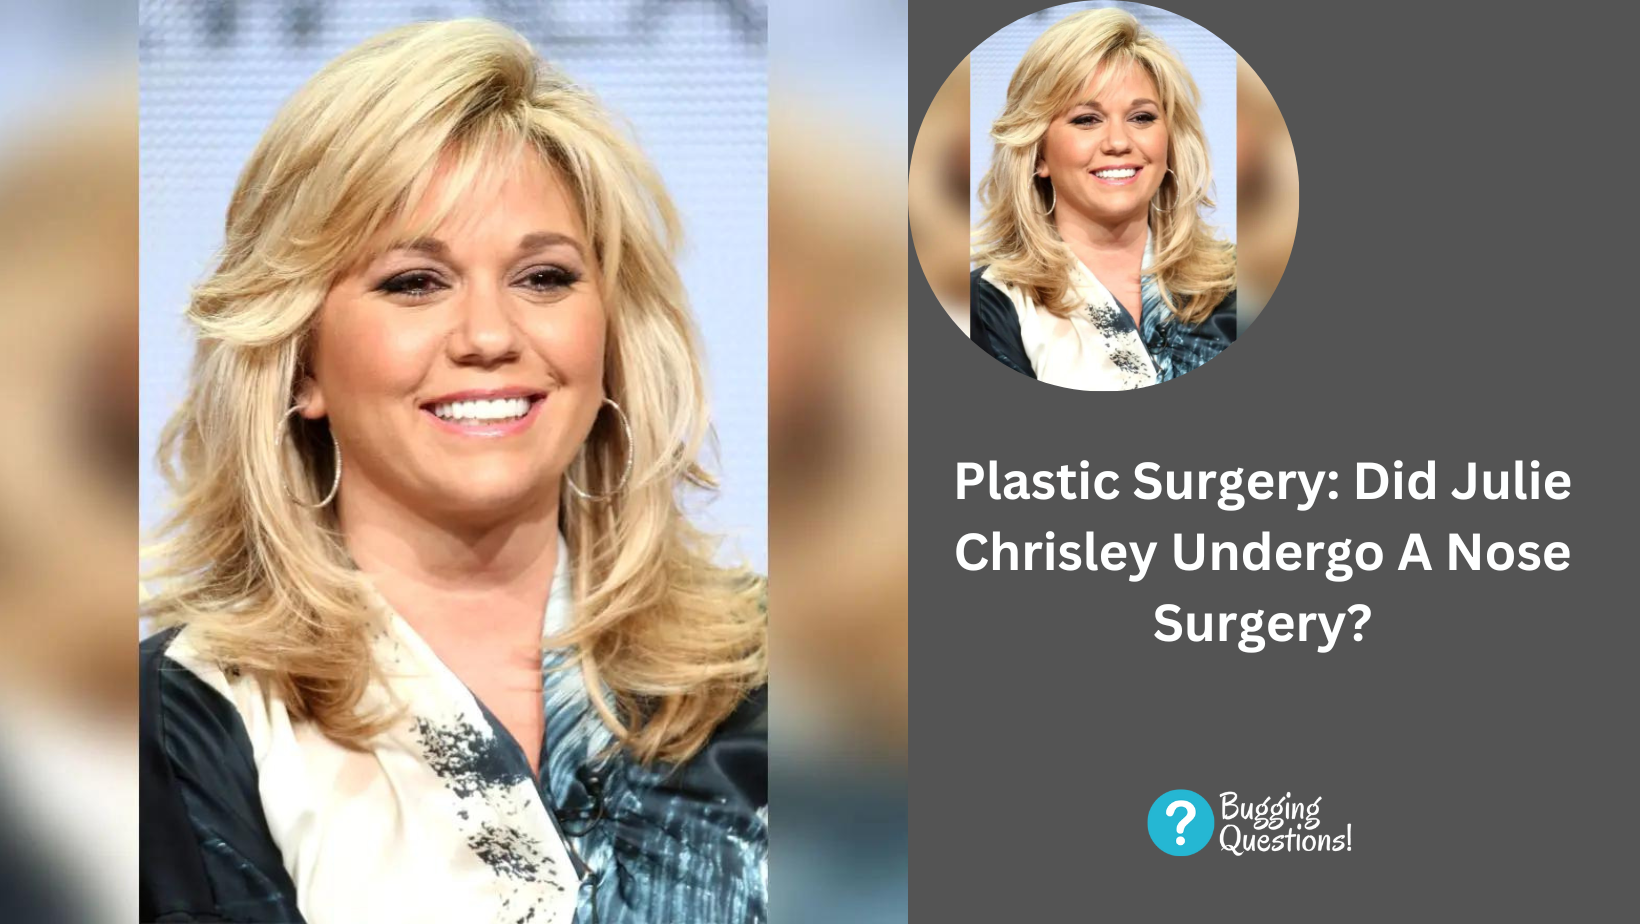 Plastic Surgery: Did Julie Chrisley Undergo A Nose Surgery?